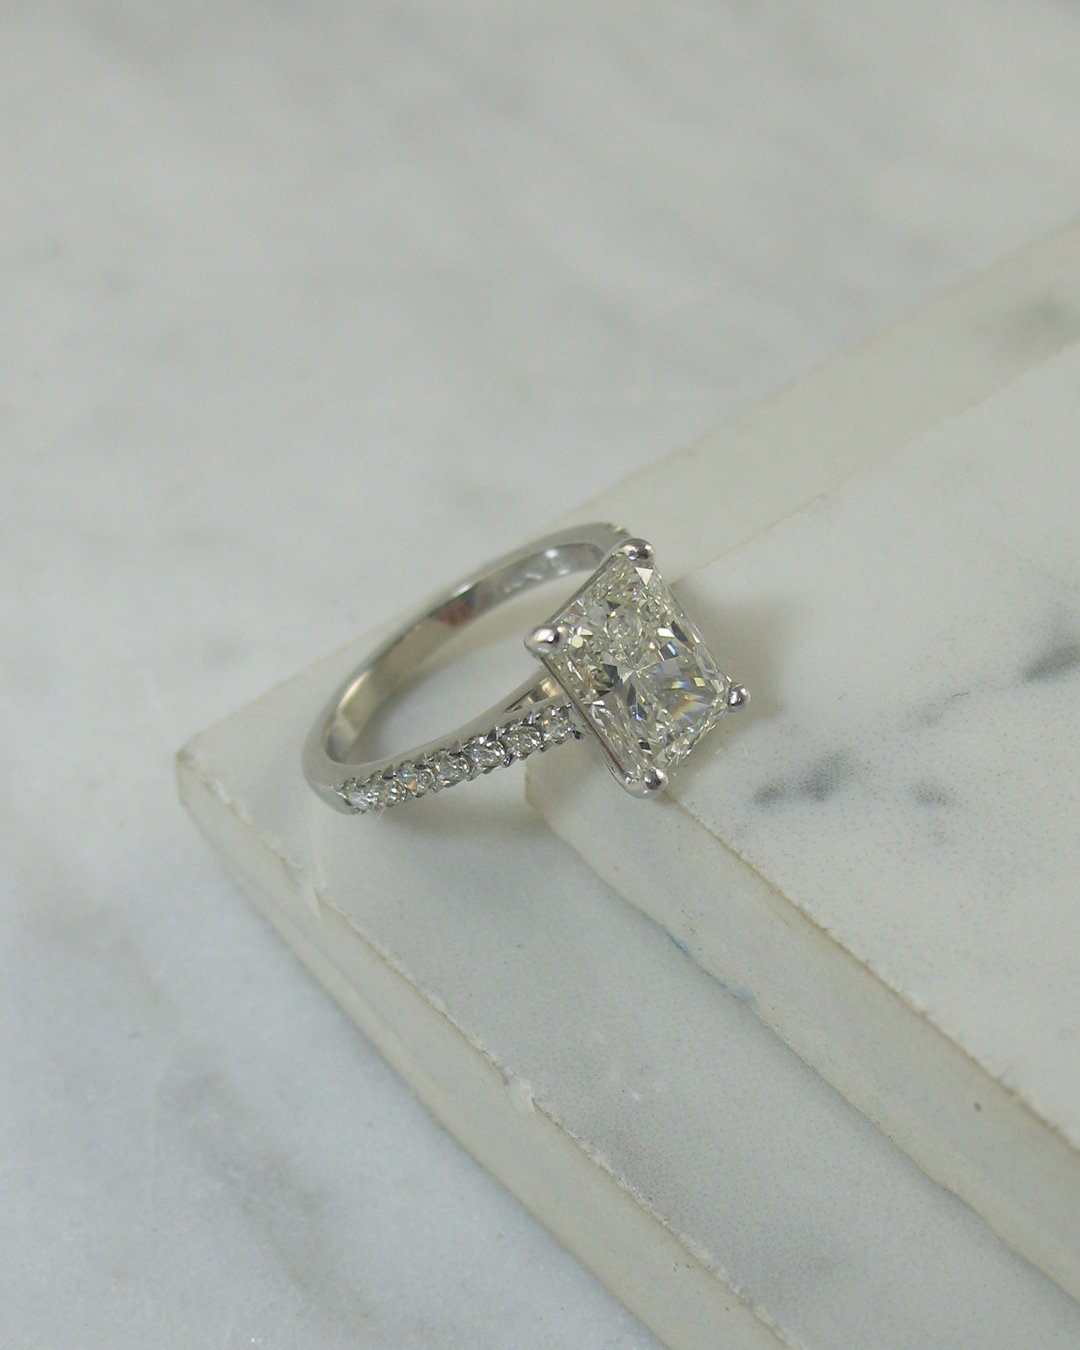 A stunning radiant cut  custom diamond ring